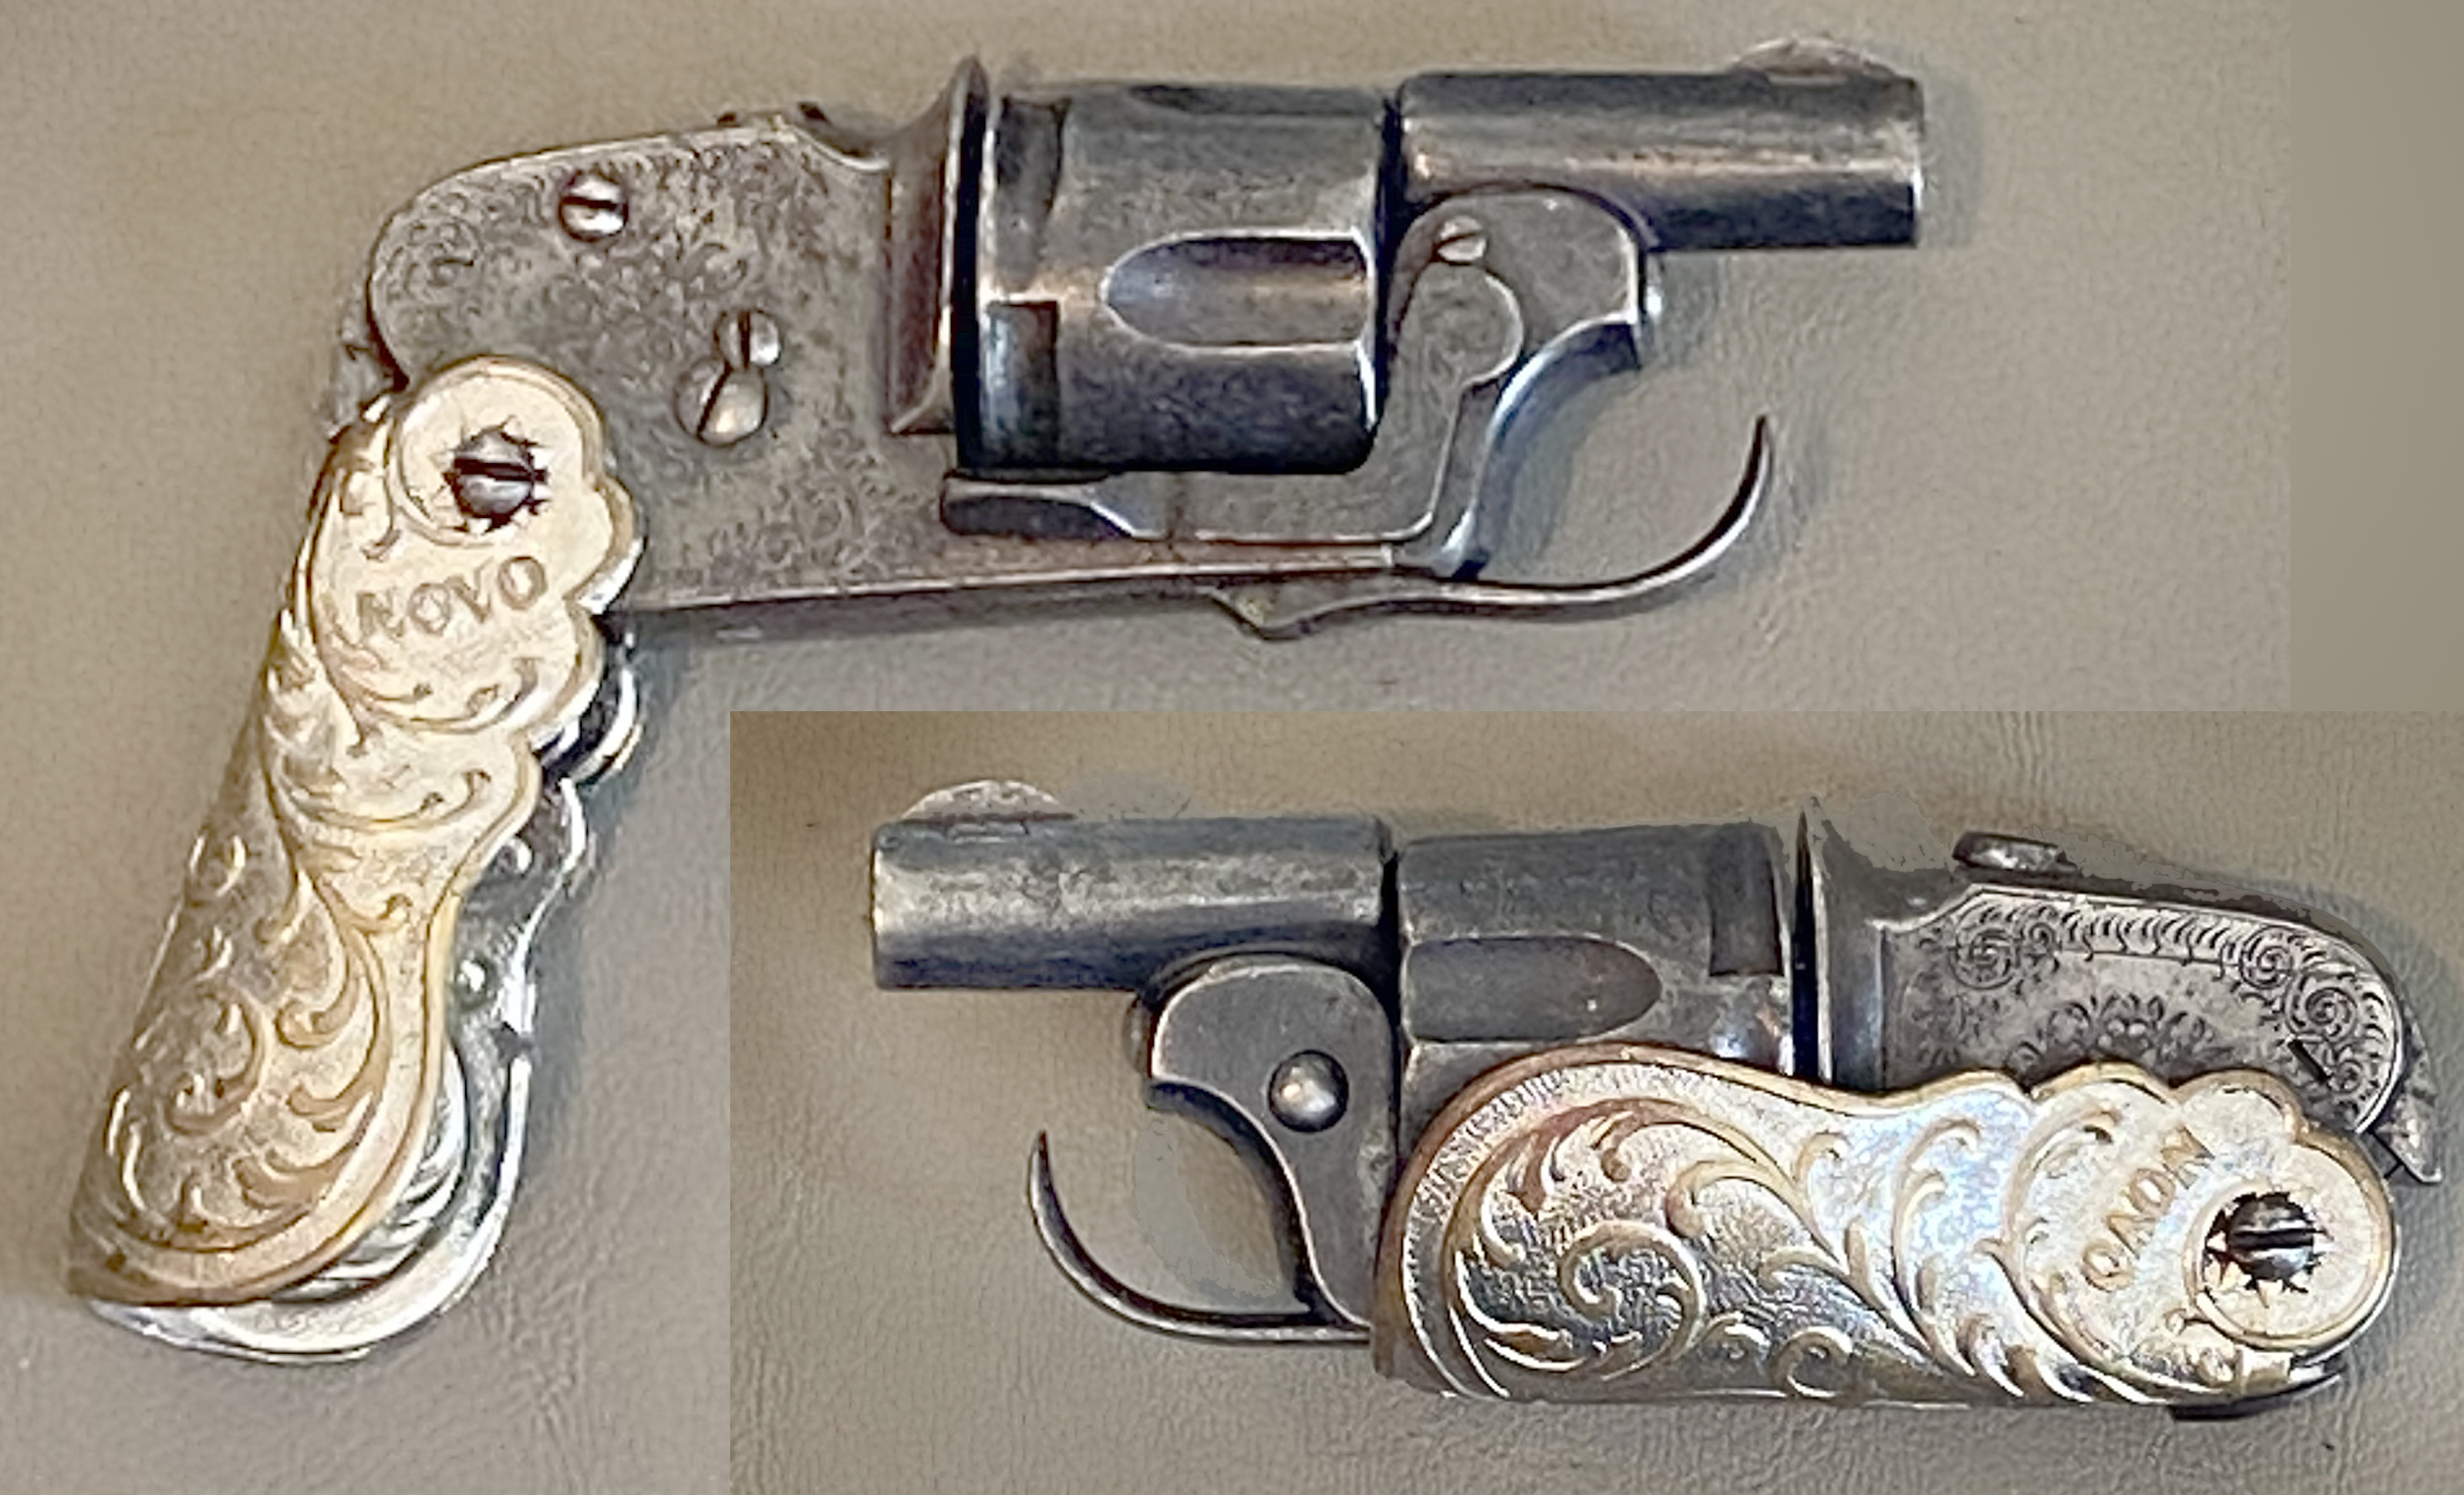 LeNovo Folding Revolver